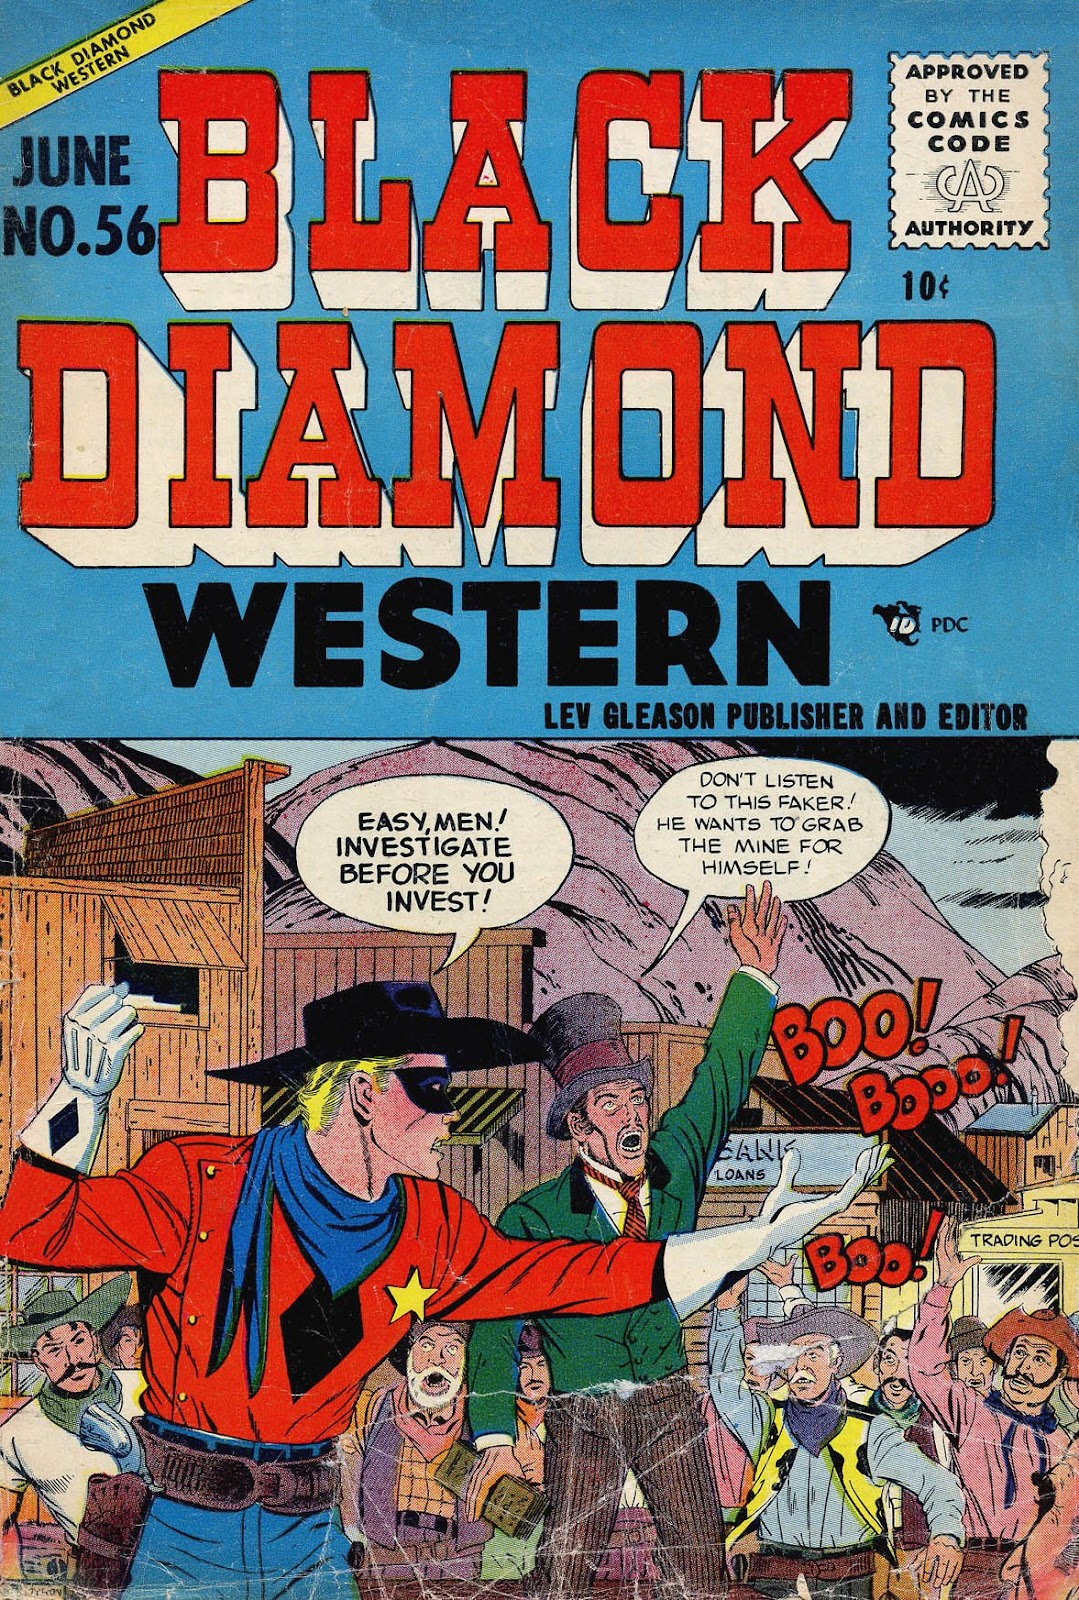 Black Diamond Western issue 56 - Page 1